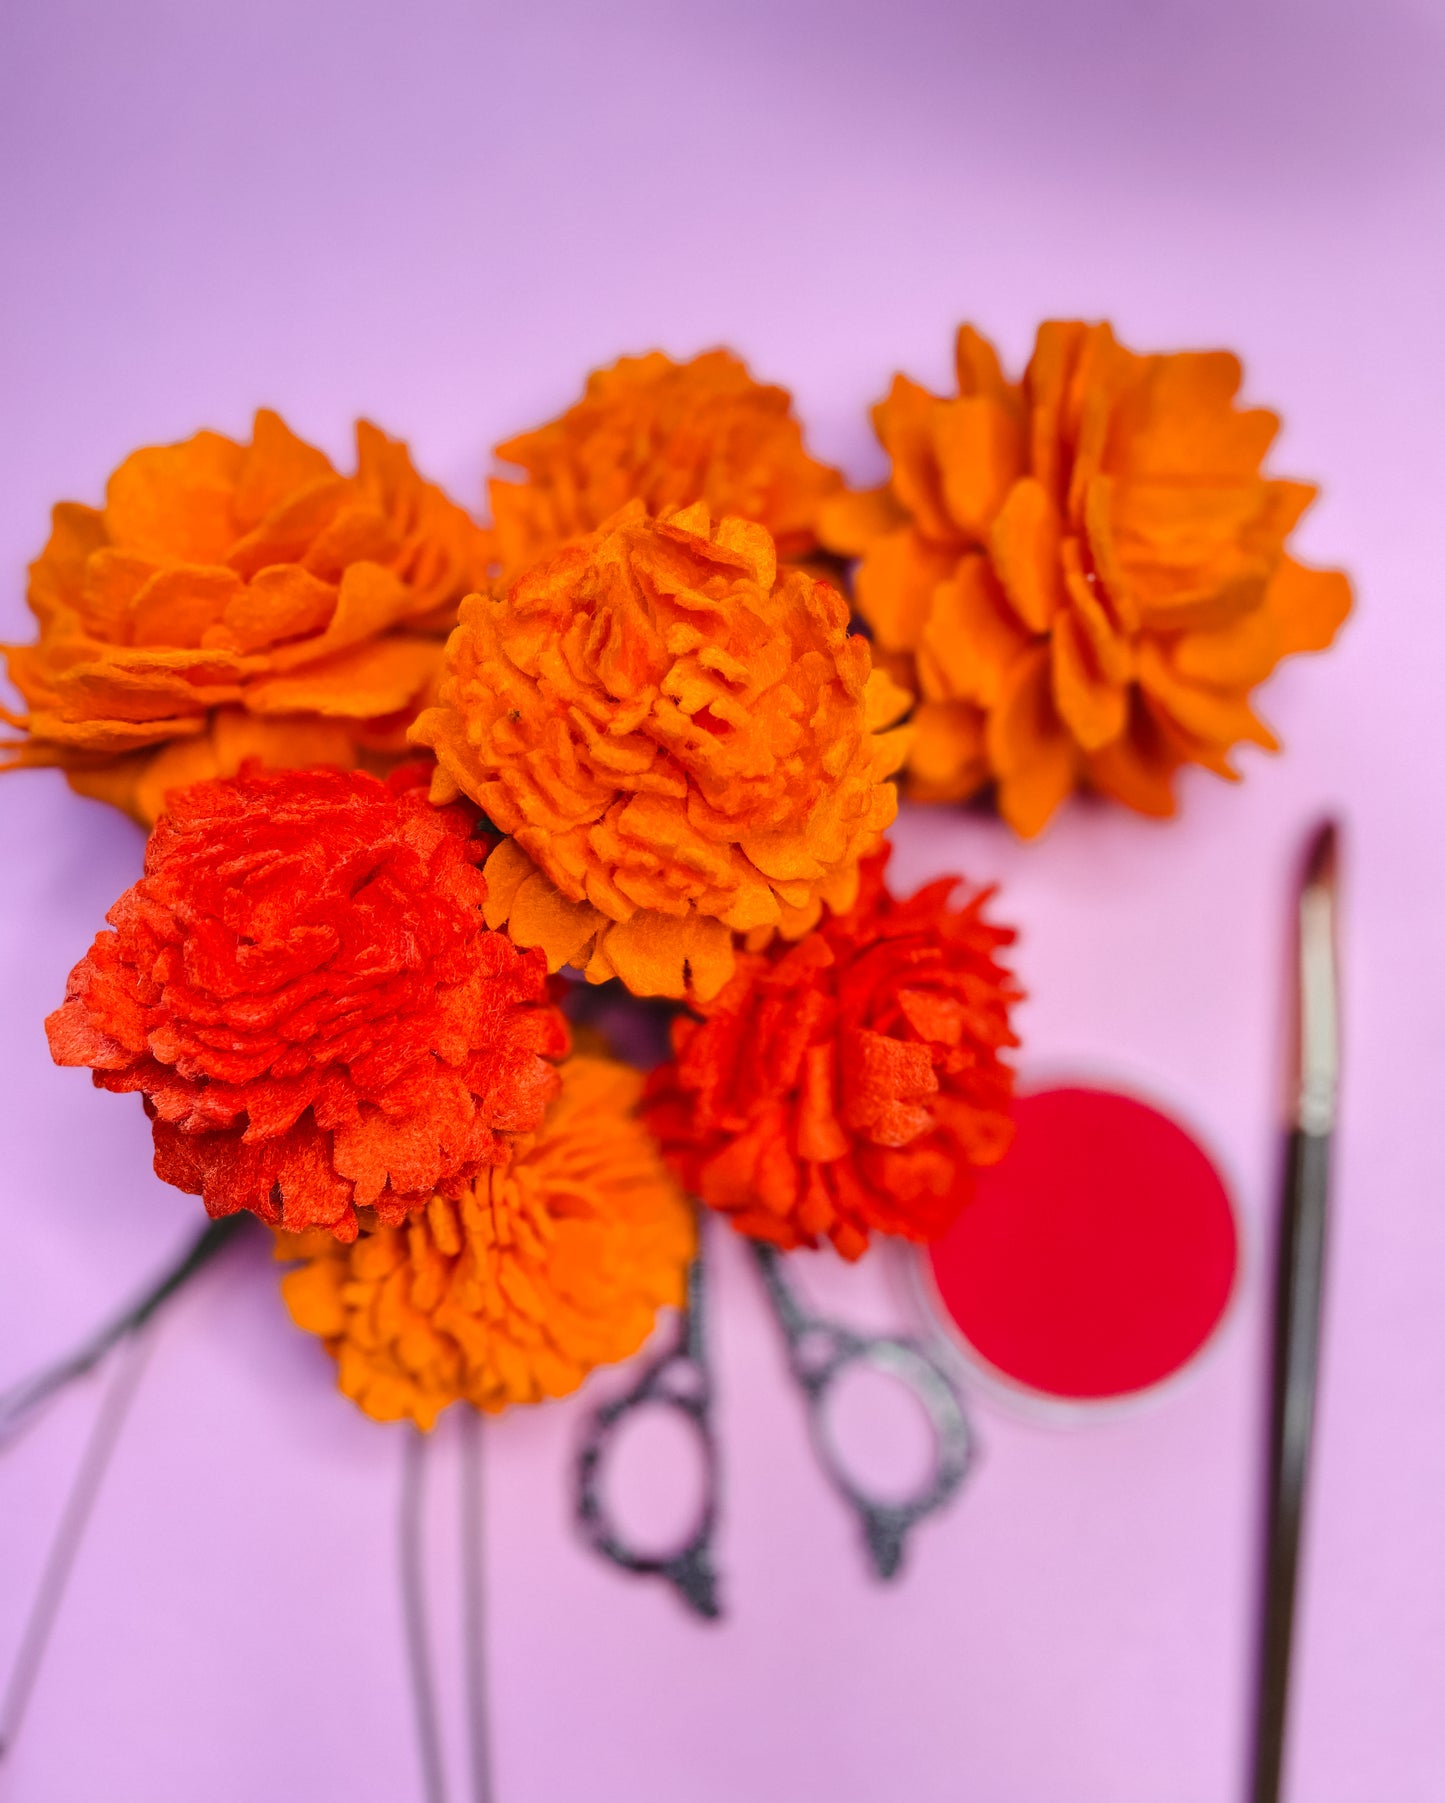 Marigolds & Cempasuchil Flower stems